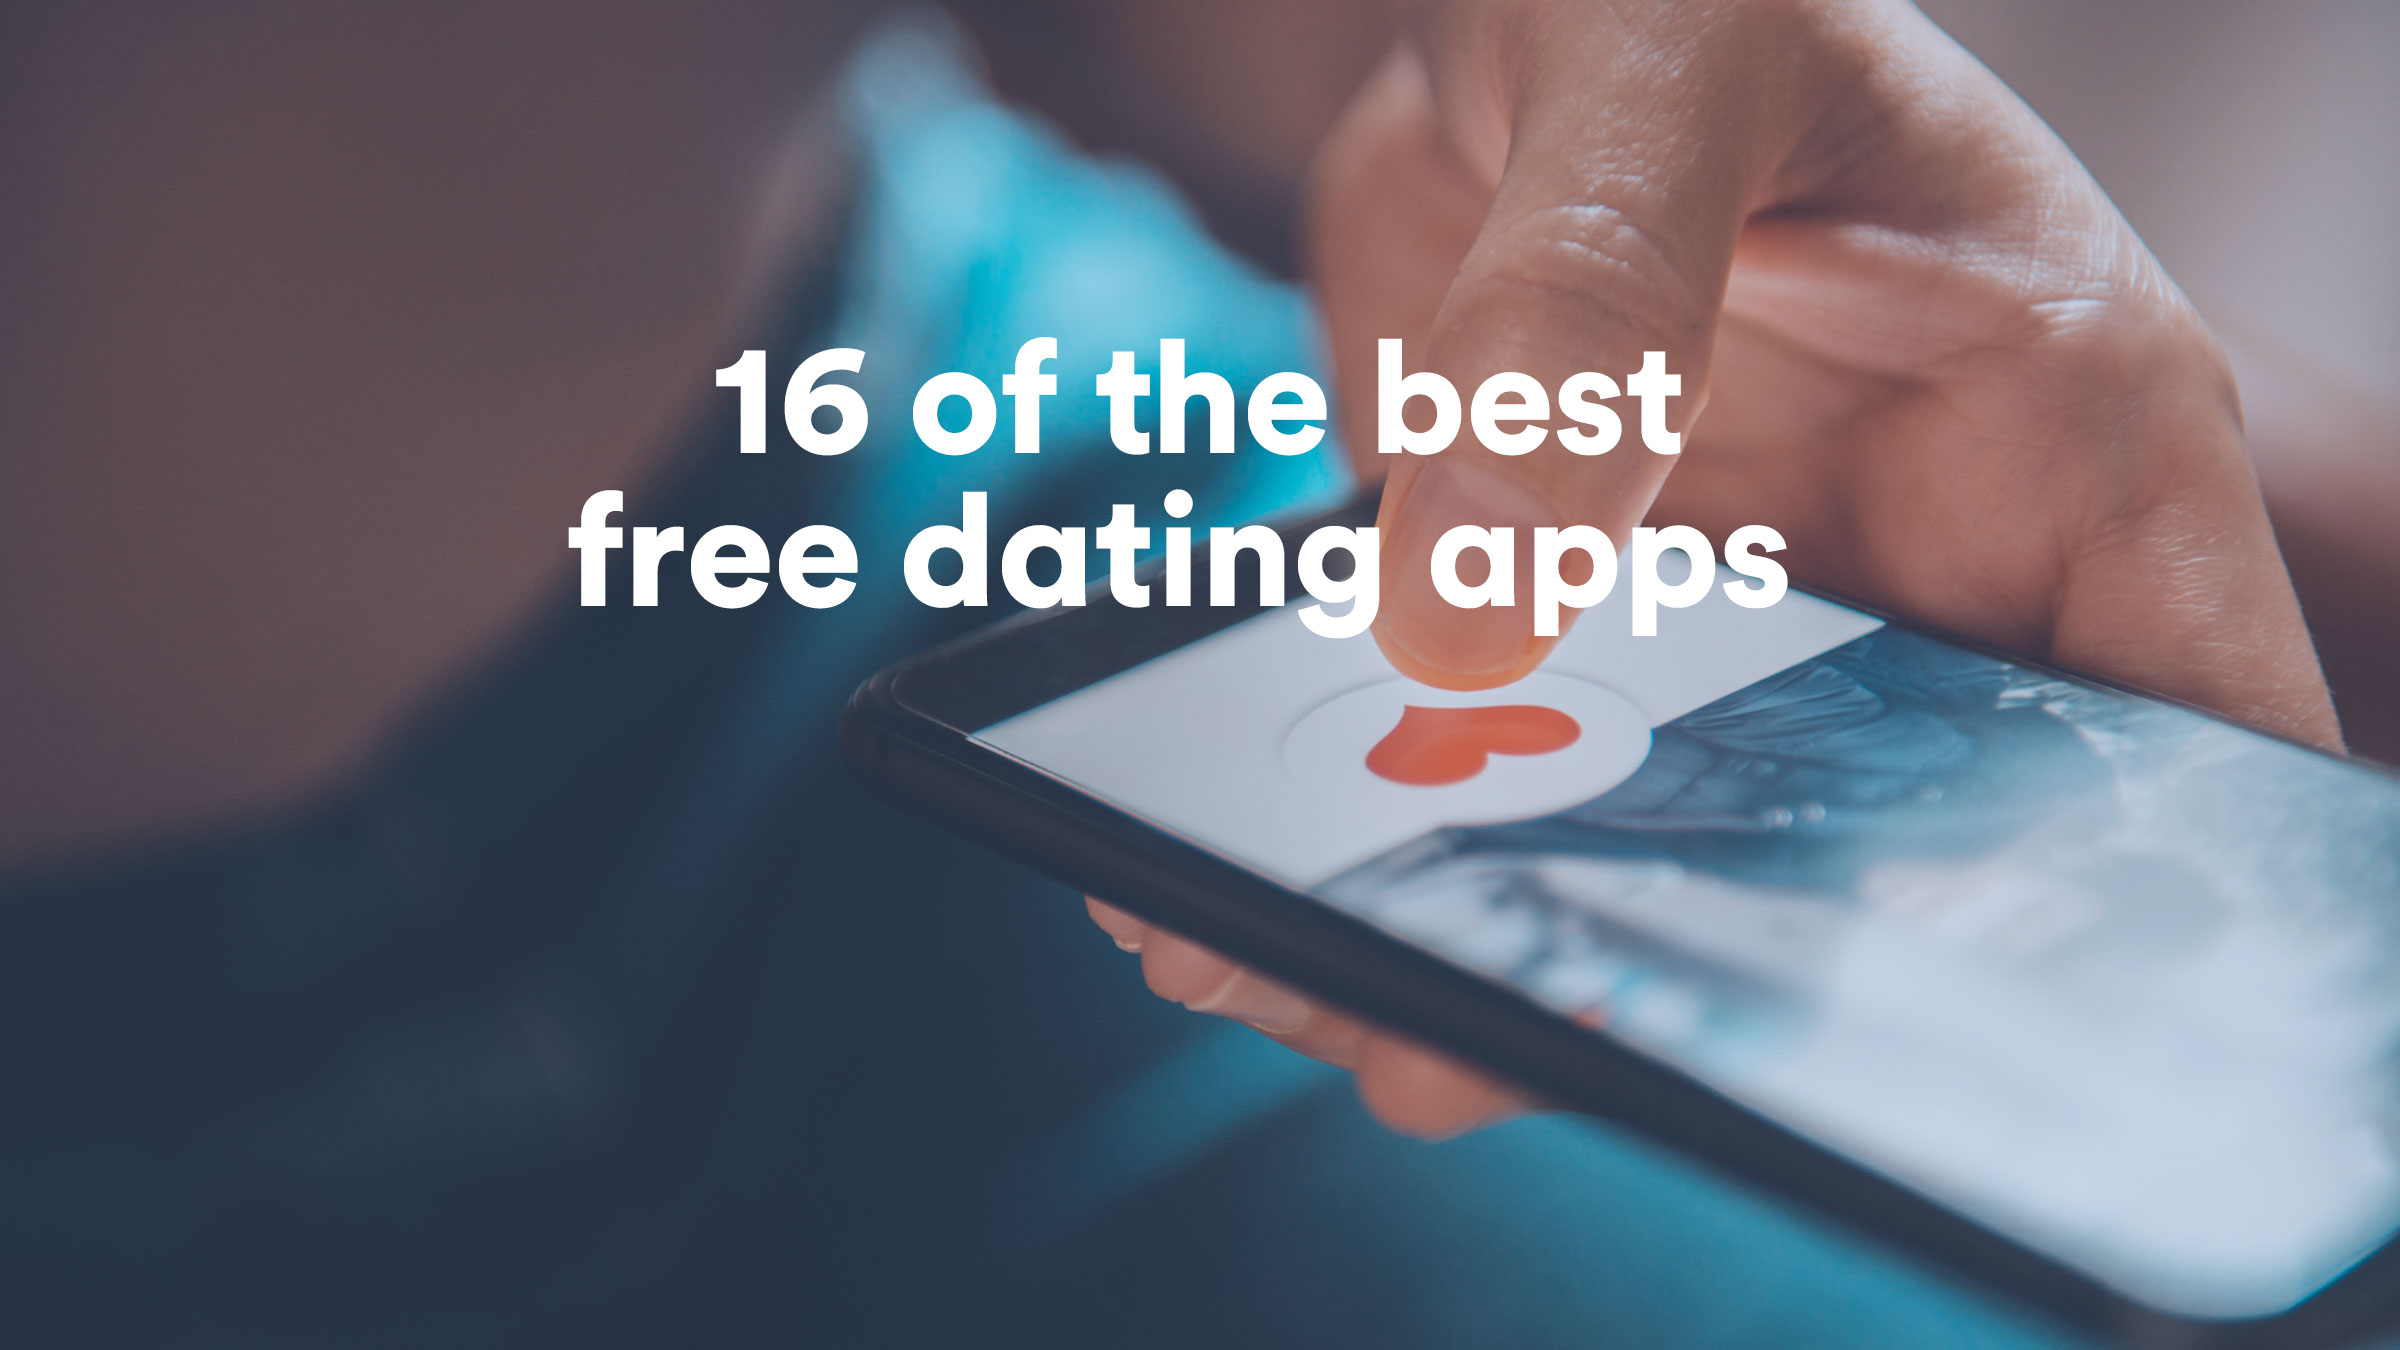 Best free dating apps – UK, 2020, relationships | Virgin Media